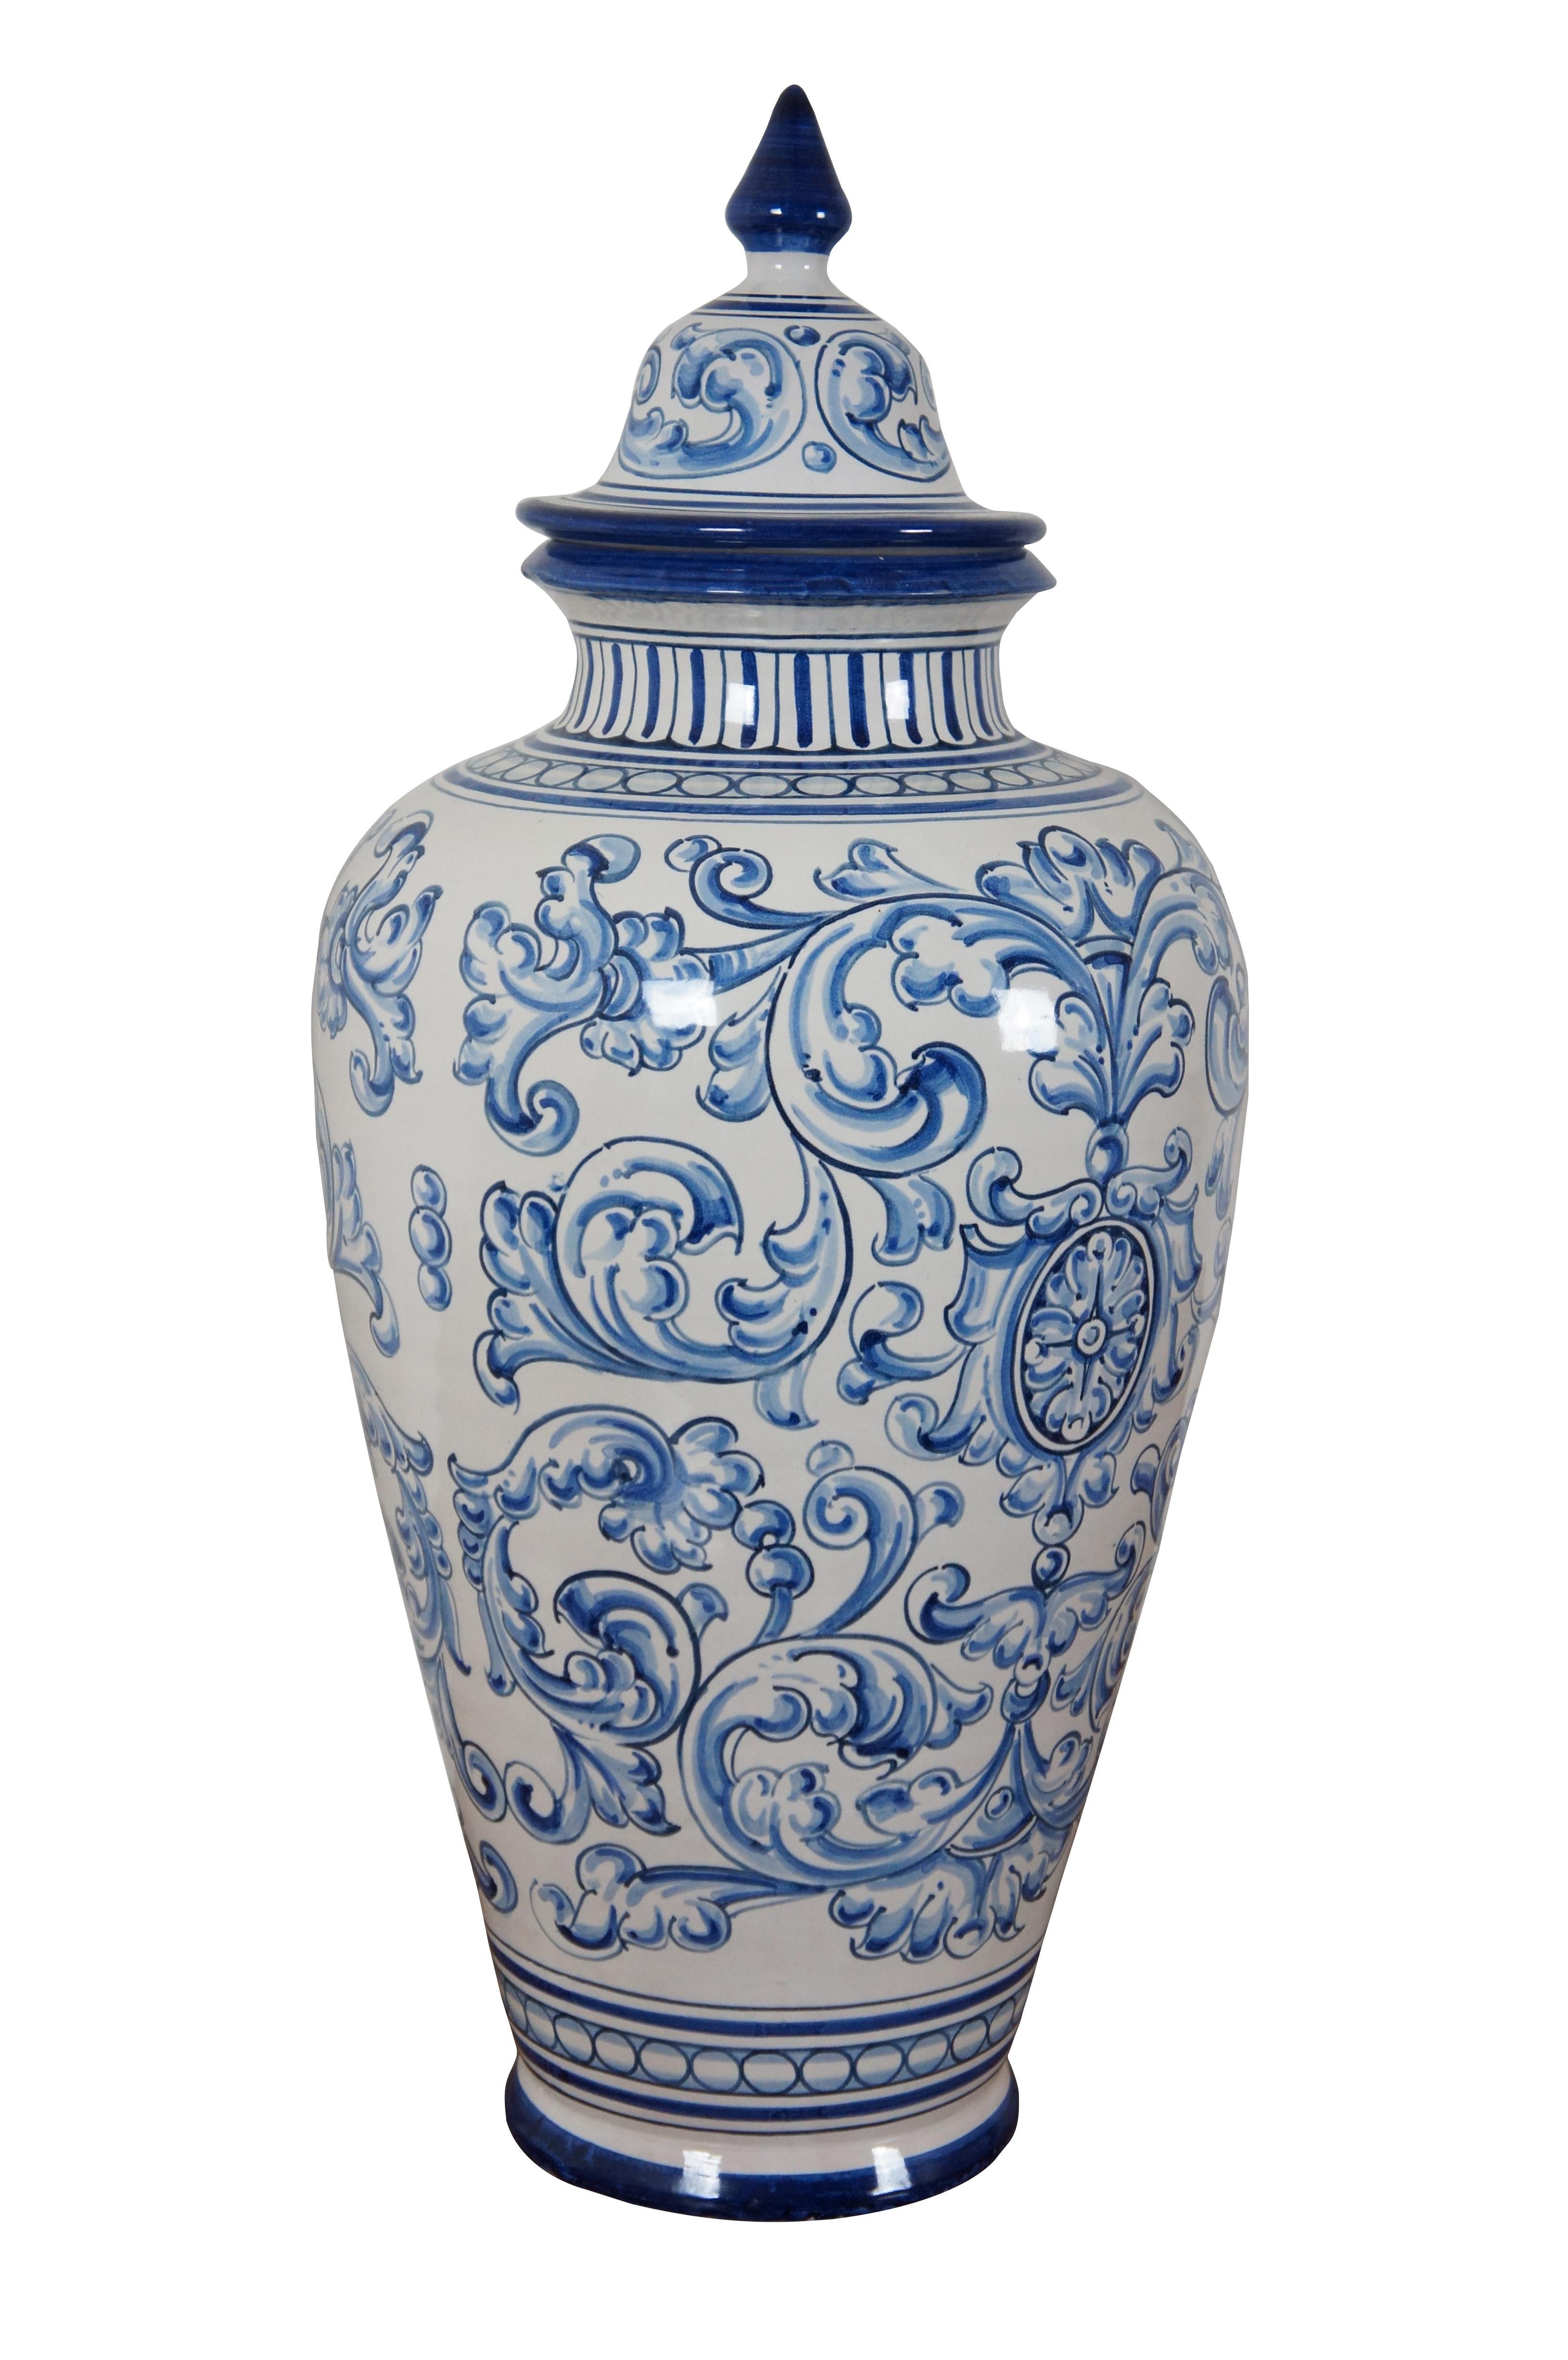 Folk Art Talavera El Carmen Spain Pottery Blue & White Lidded Mantel Urn Vase 22